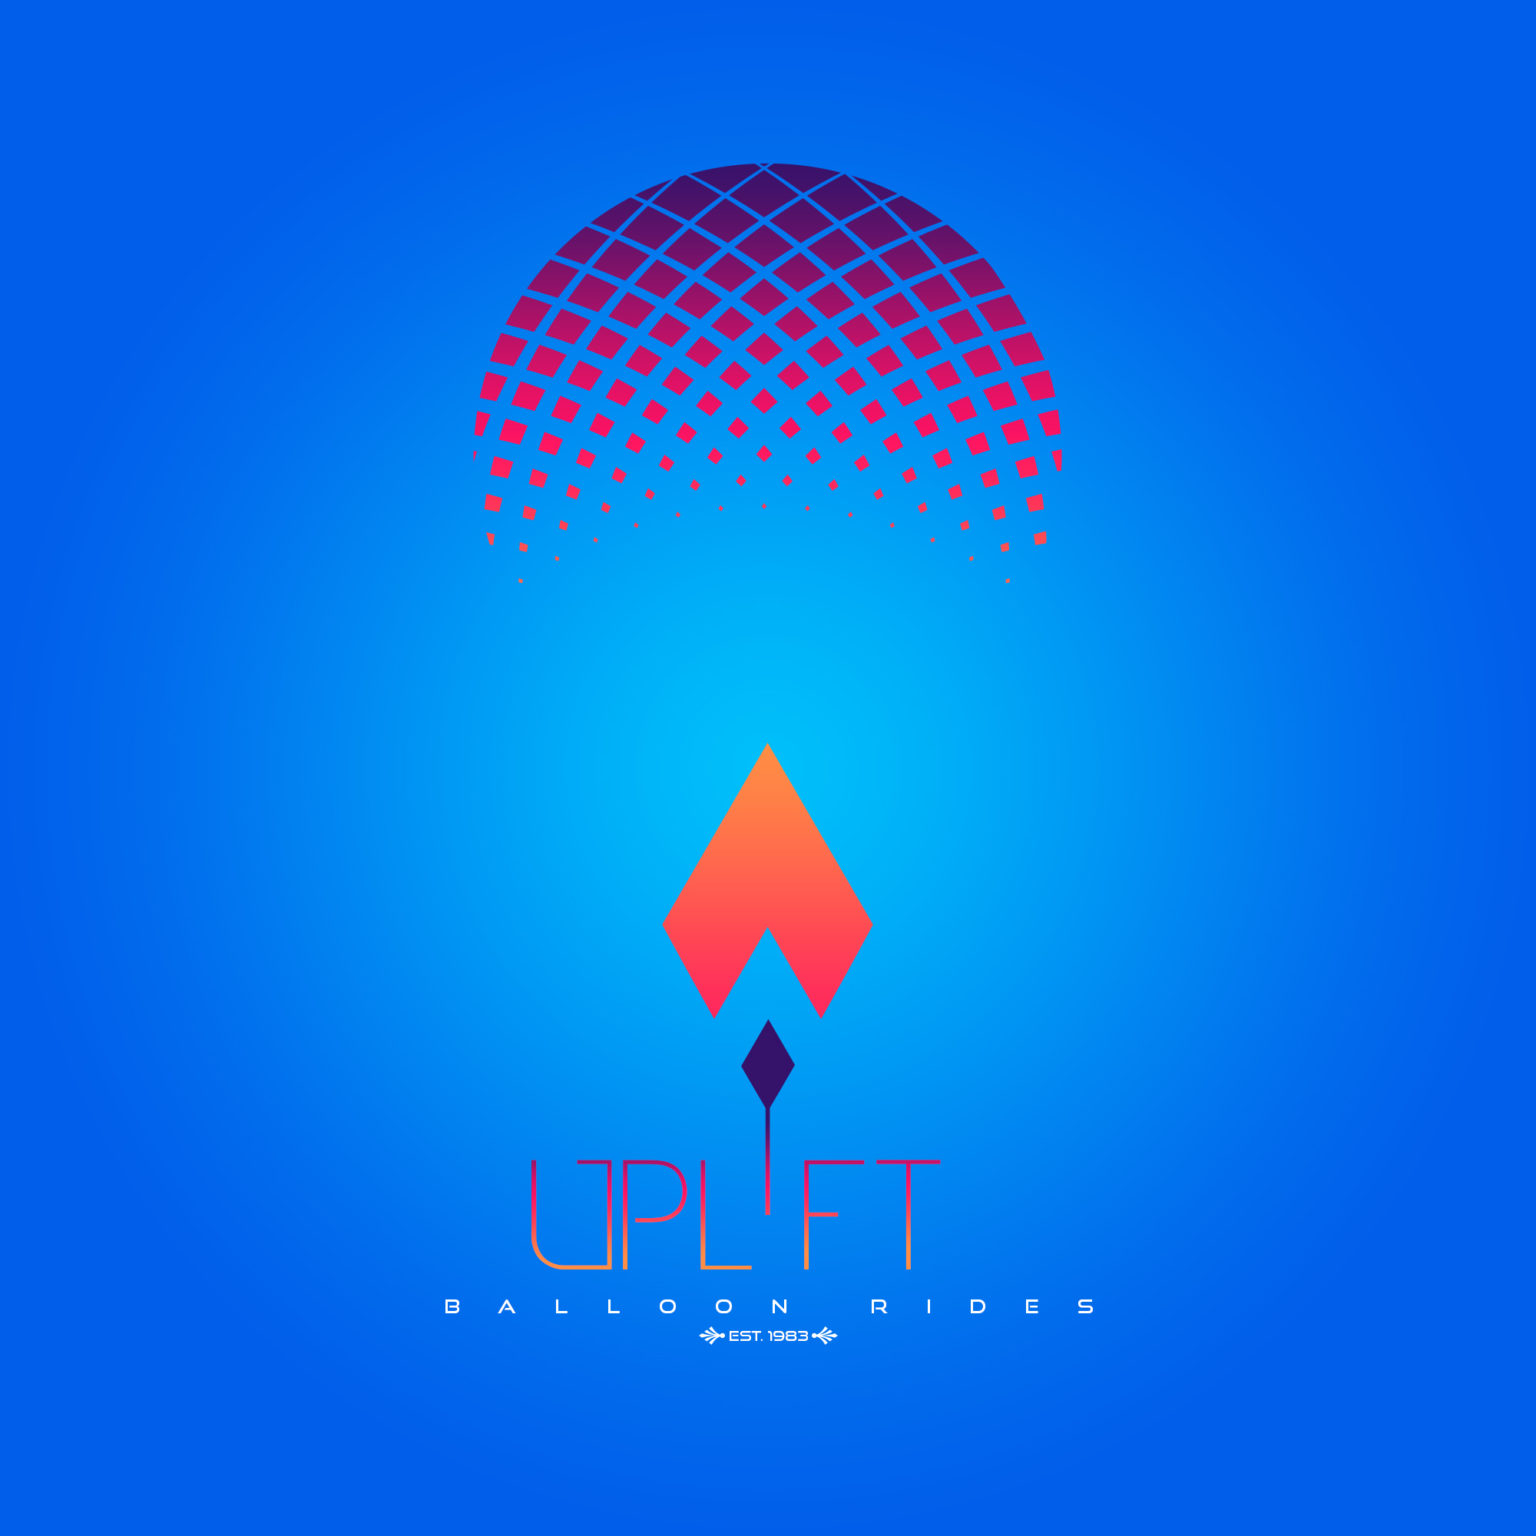 A logo for fictional balloon riding company Uplift from digital design studio Haeresis